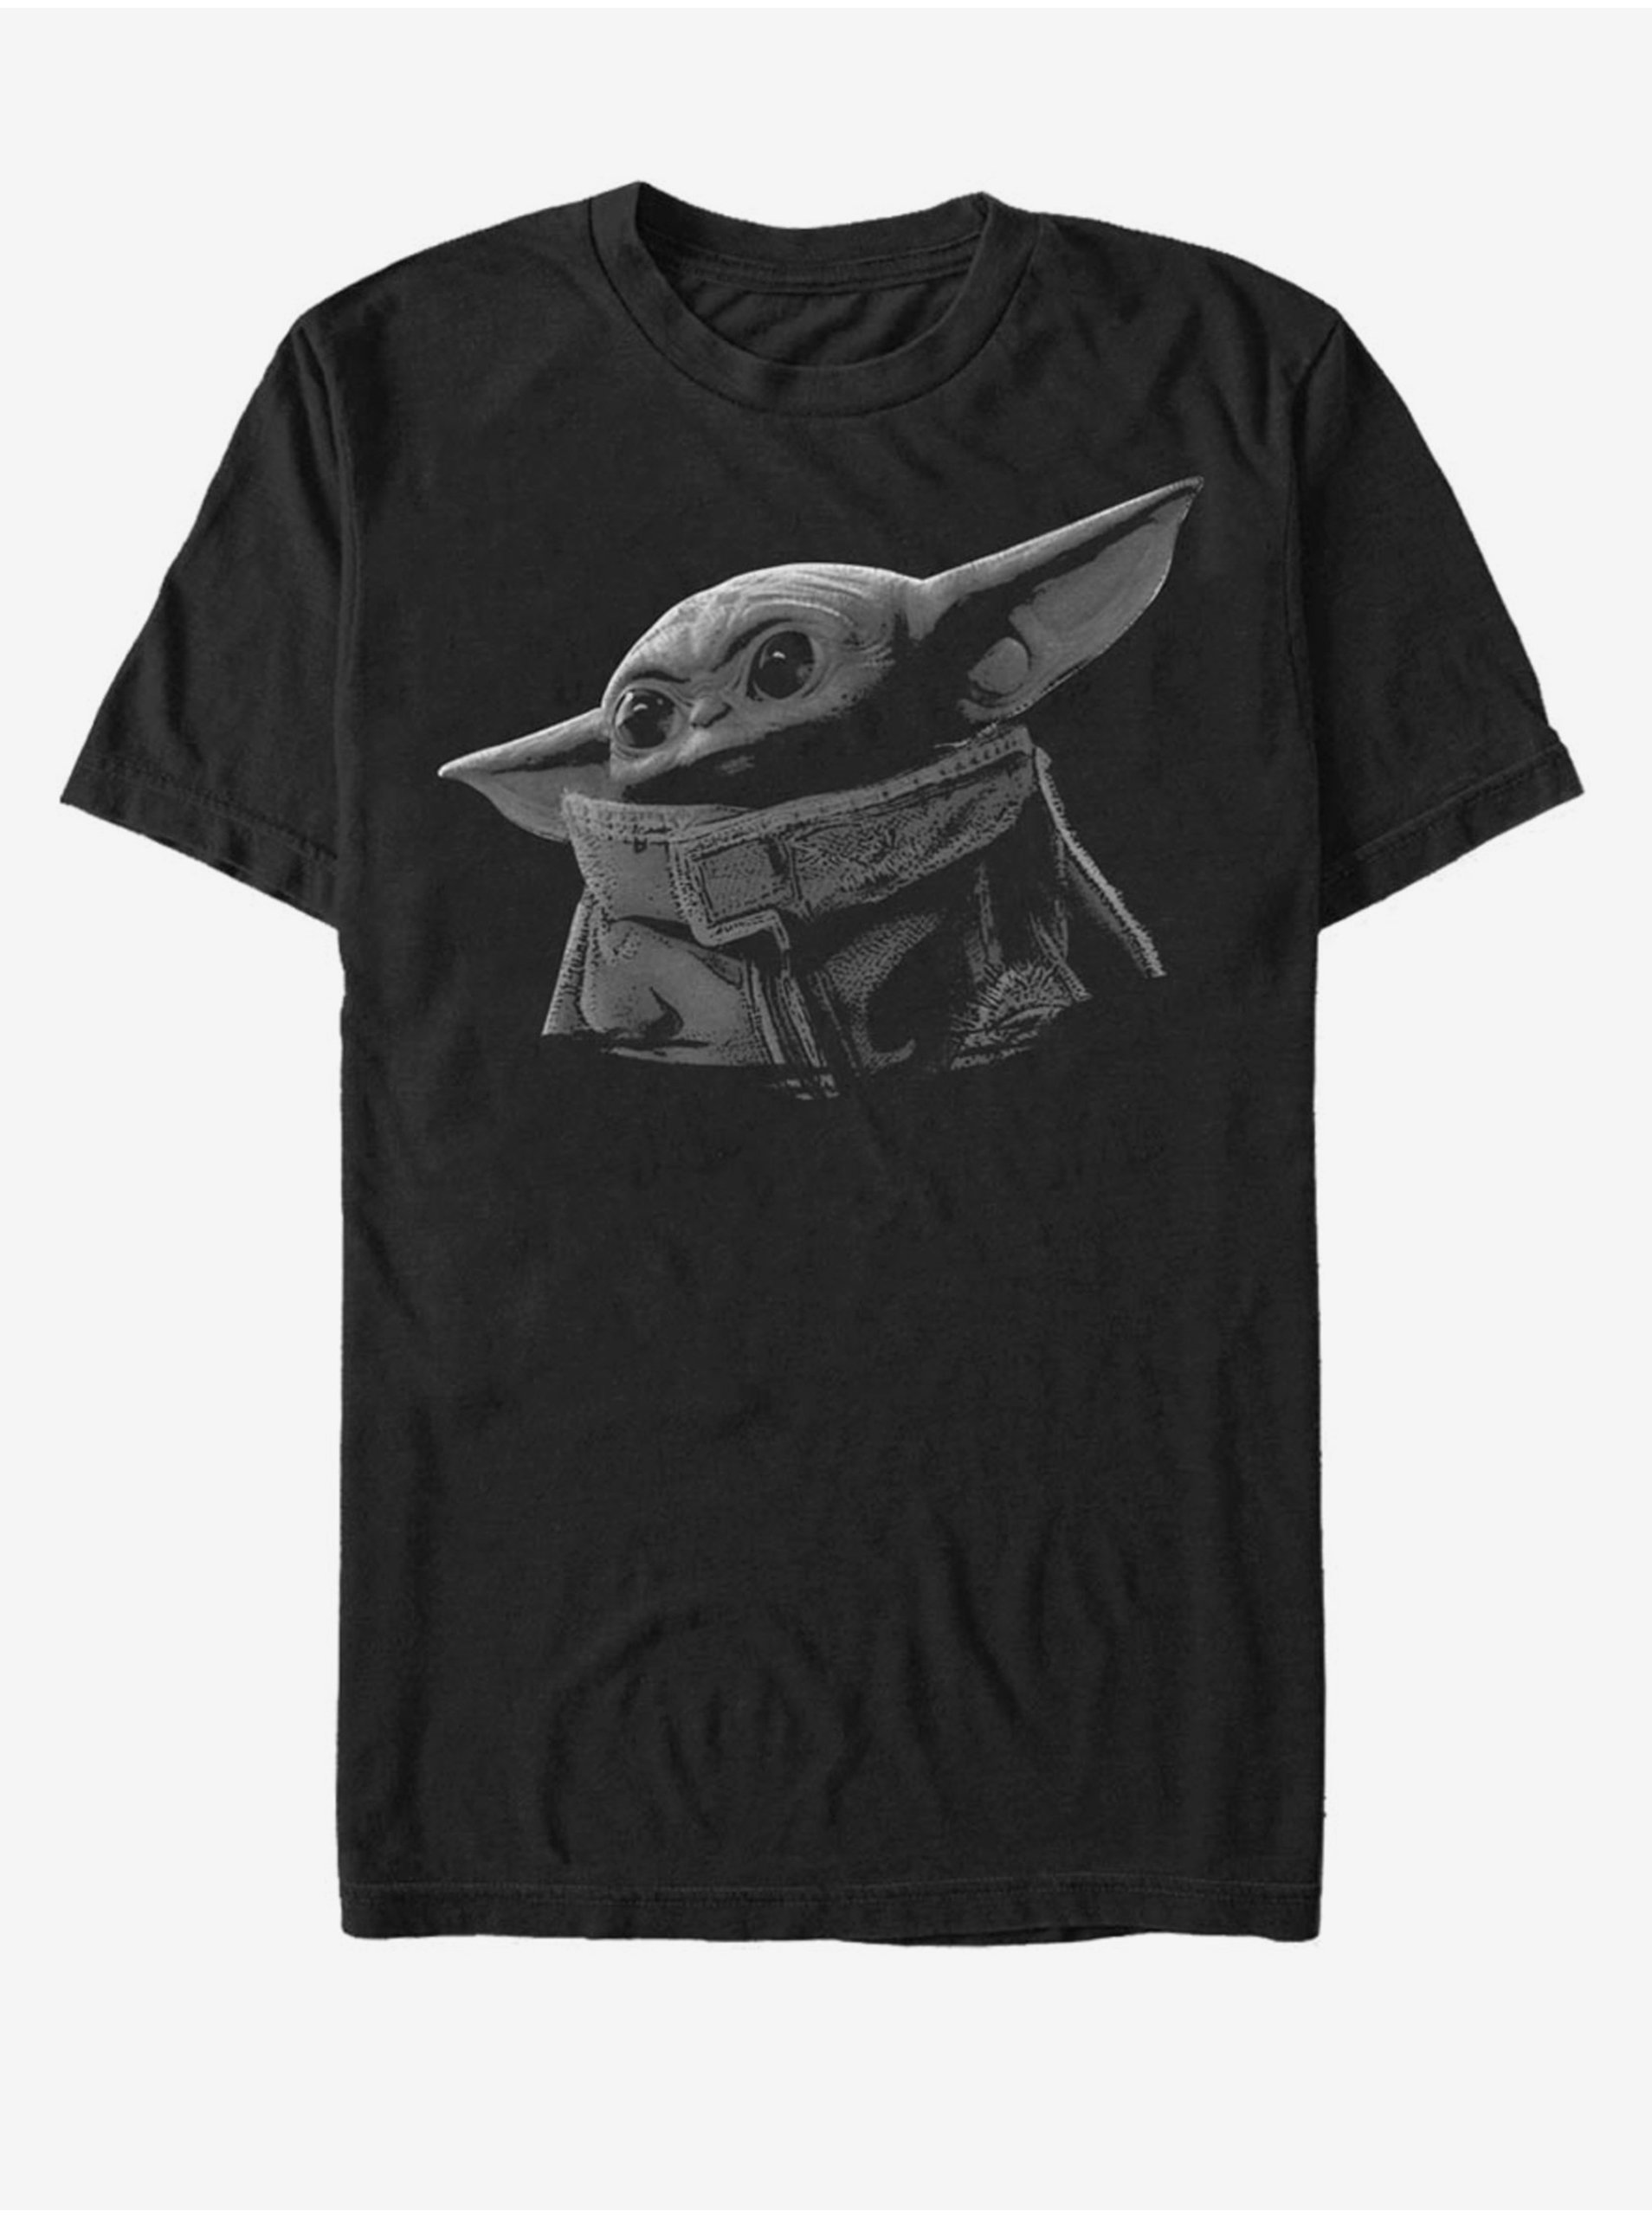 Lacno Baby Yoda ZOOT. FAN Star Wars - unisex tričko